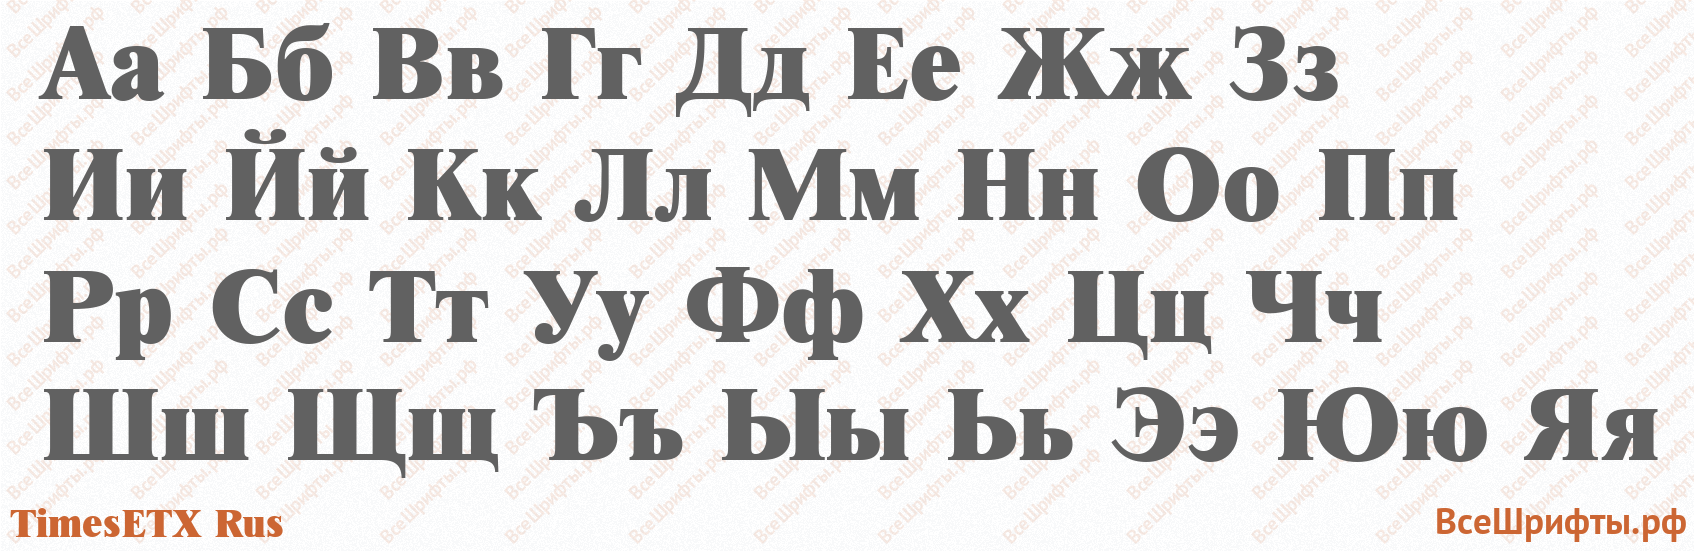 Шрифт TimesETX Rus с русскими буквами